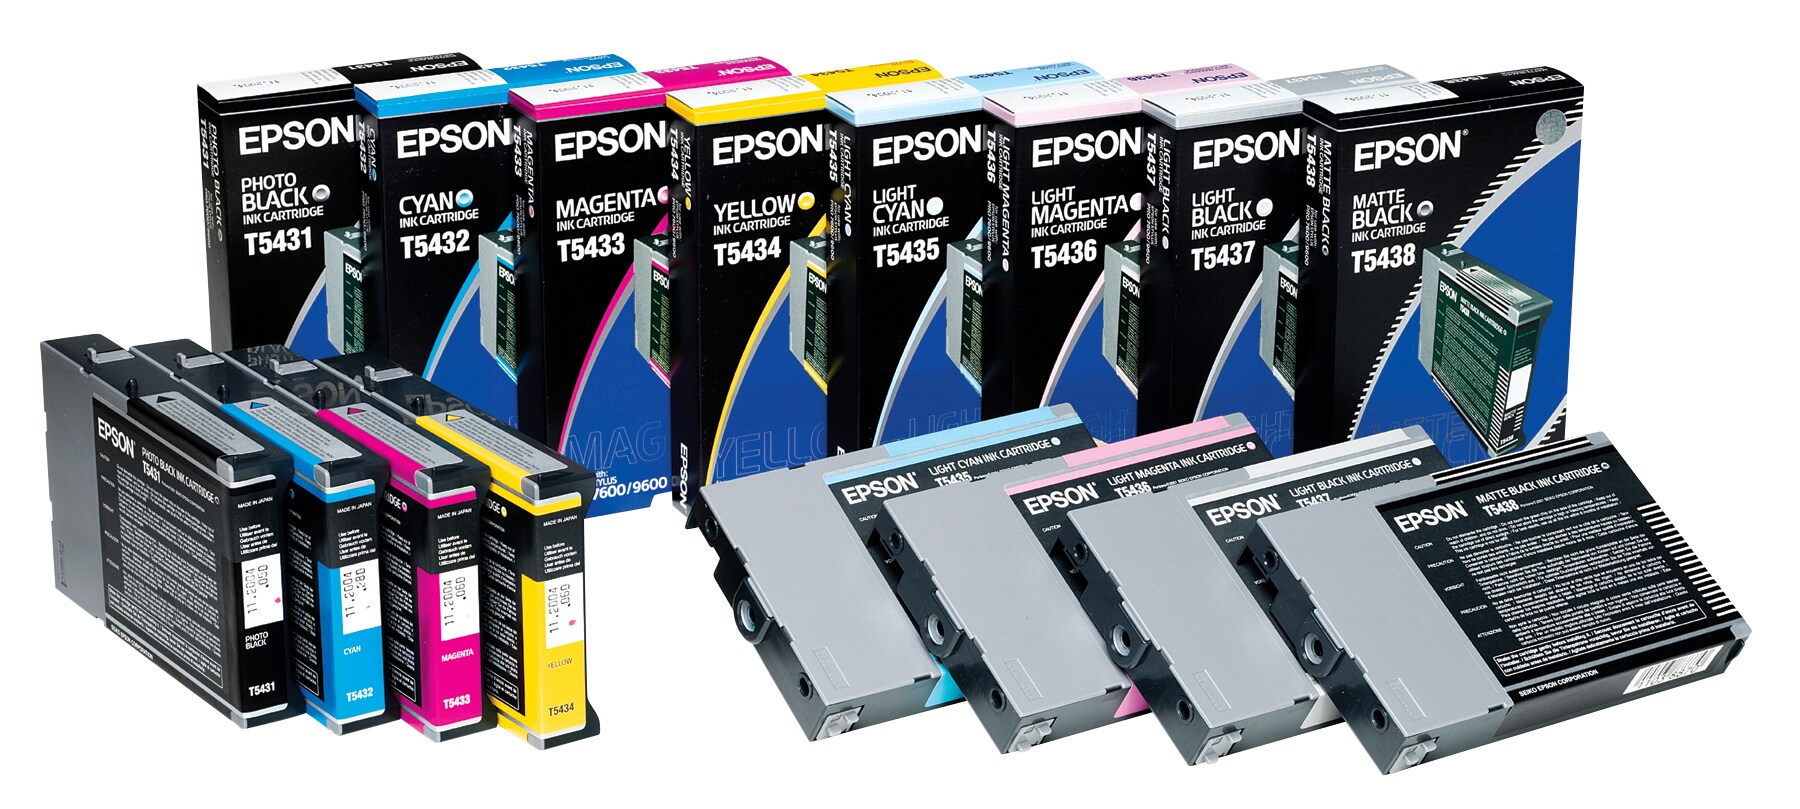 Epson UltraChrome Magenta Ink Cartridge